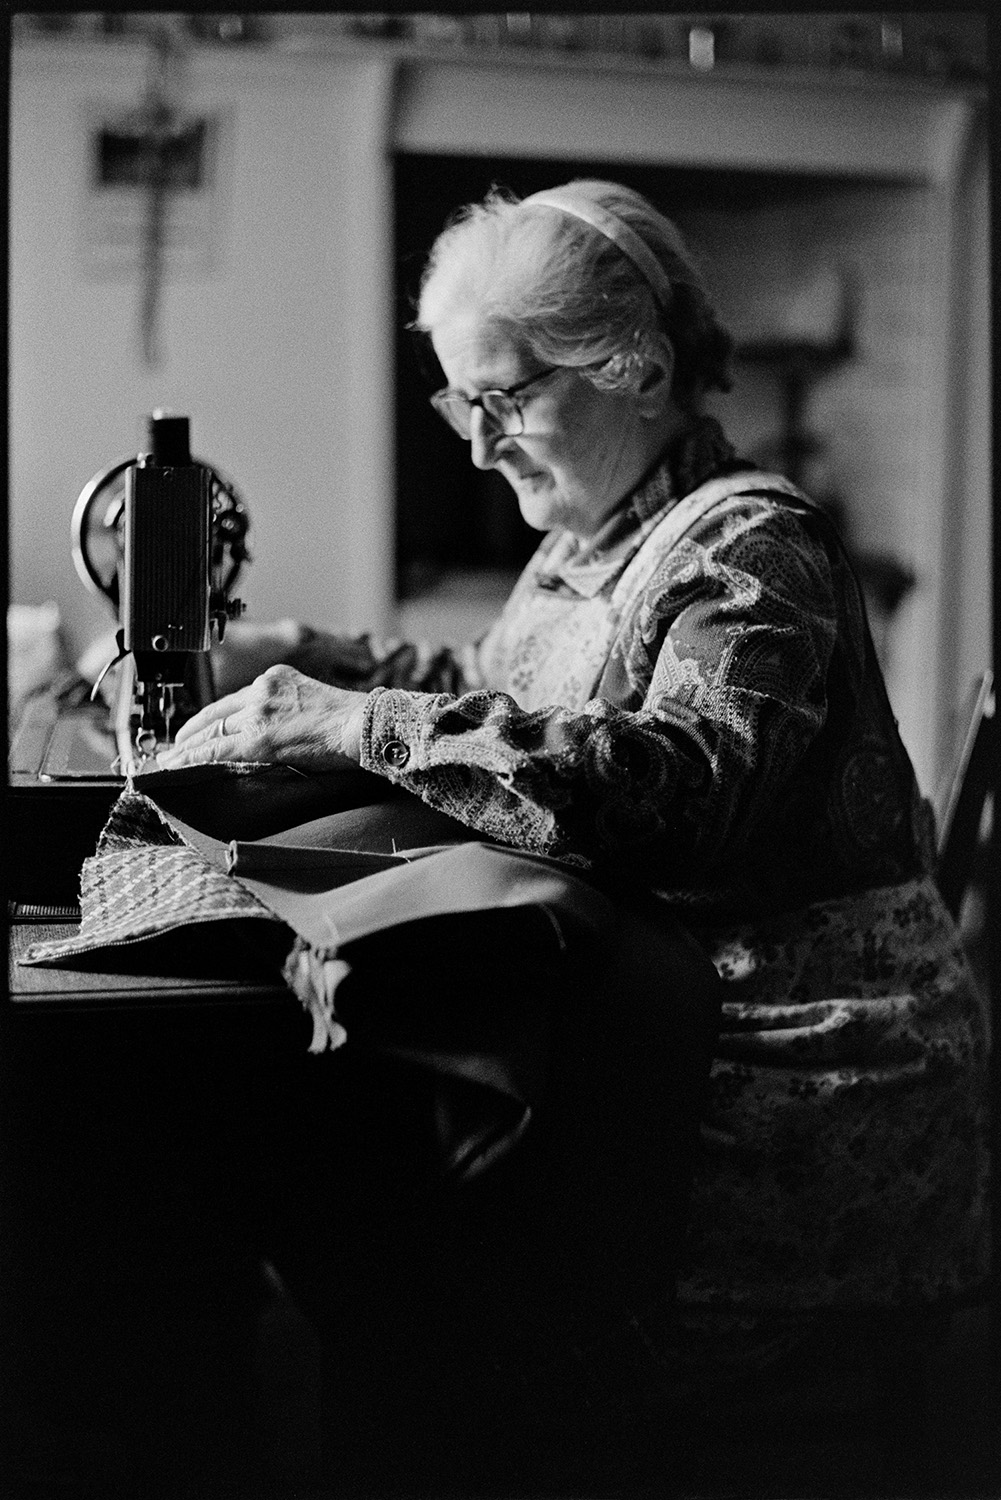 Woman using sewing machine. 
[Norah Maynard using a manual sewing machine in her home at Atherington.]